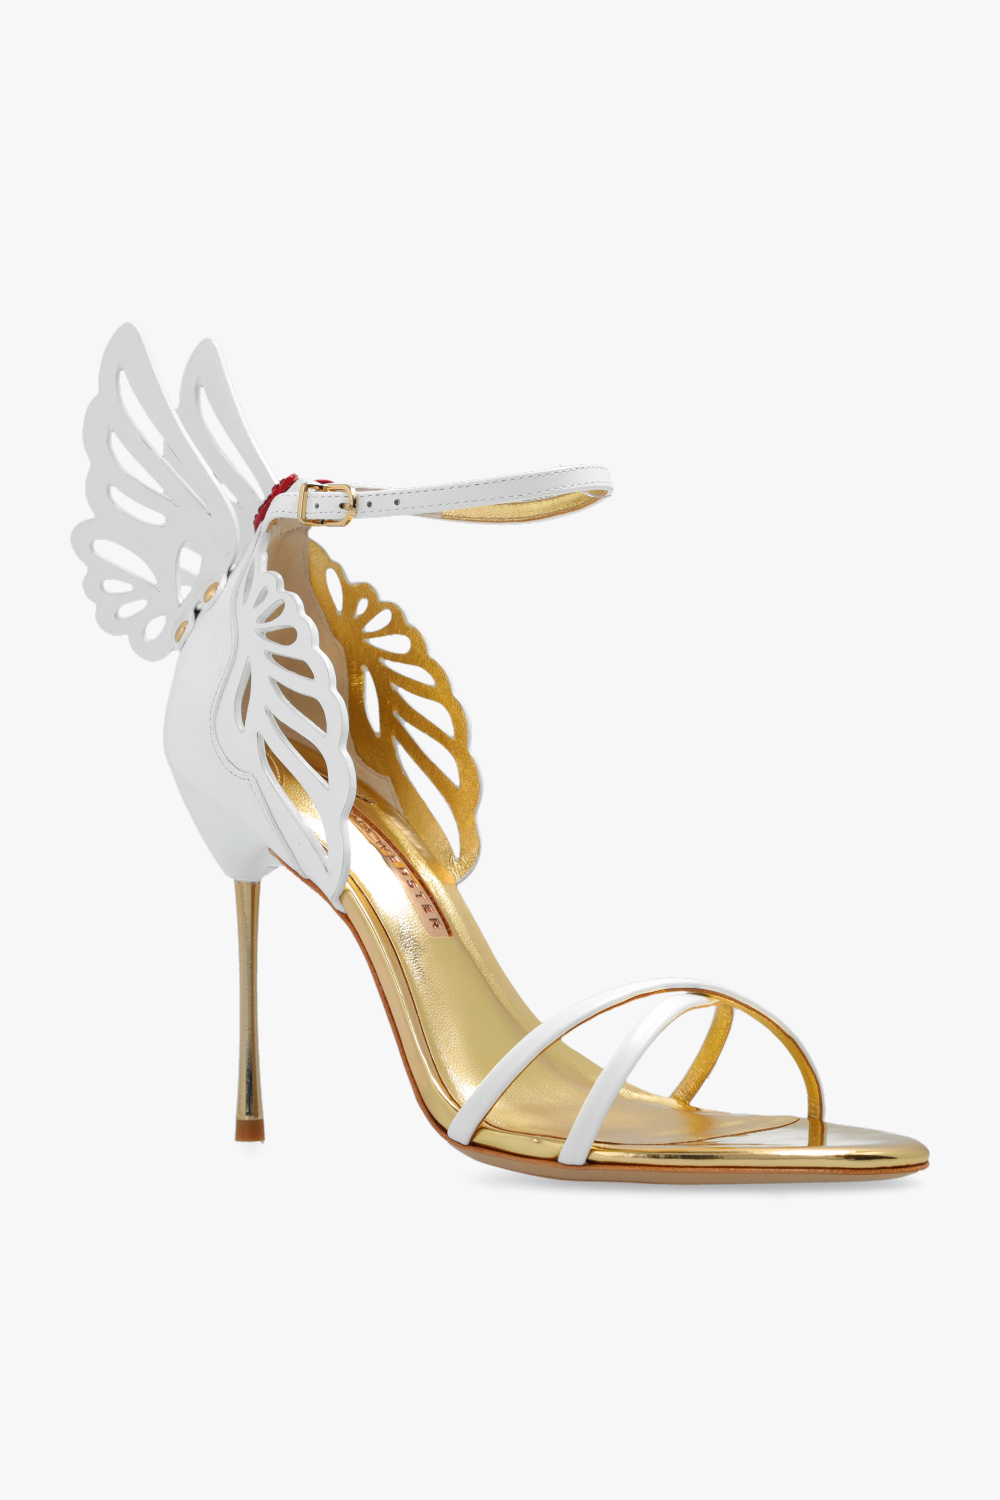 Sophia Webster ‘Heavenly’ heeled sandals